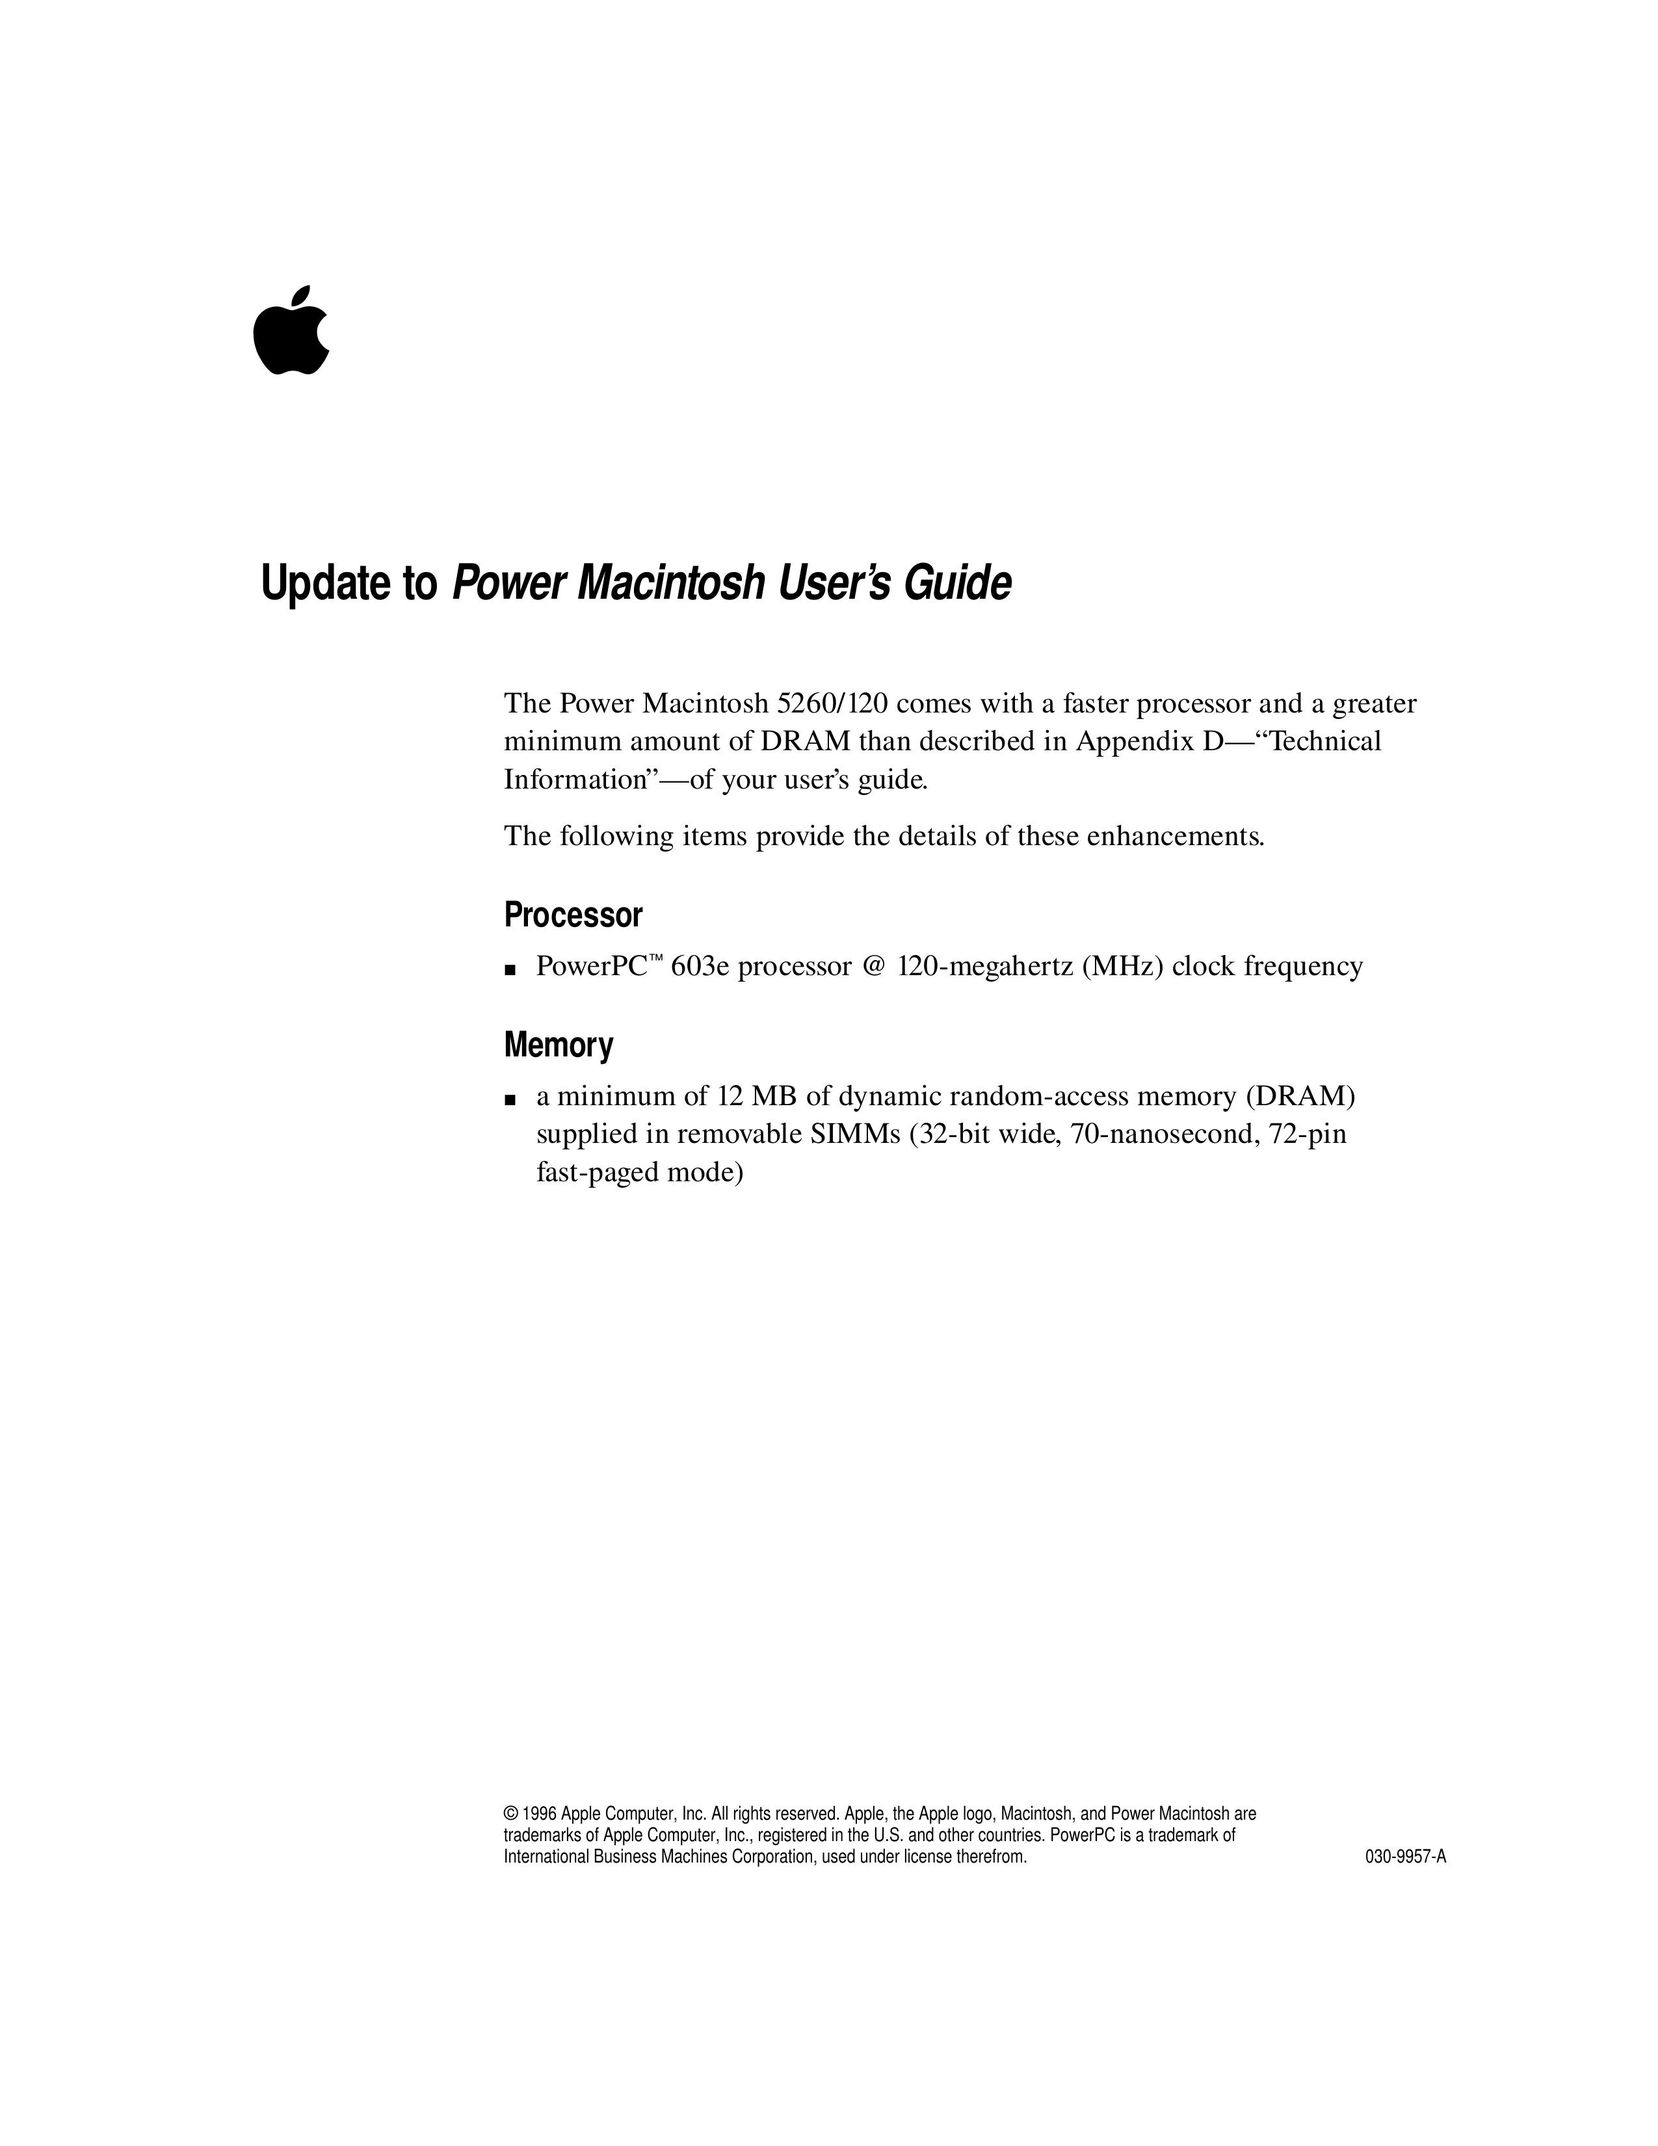 Apple 5260/120 Series Personal Computer User Manual